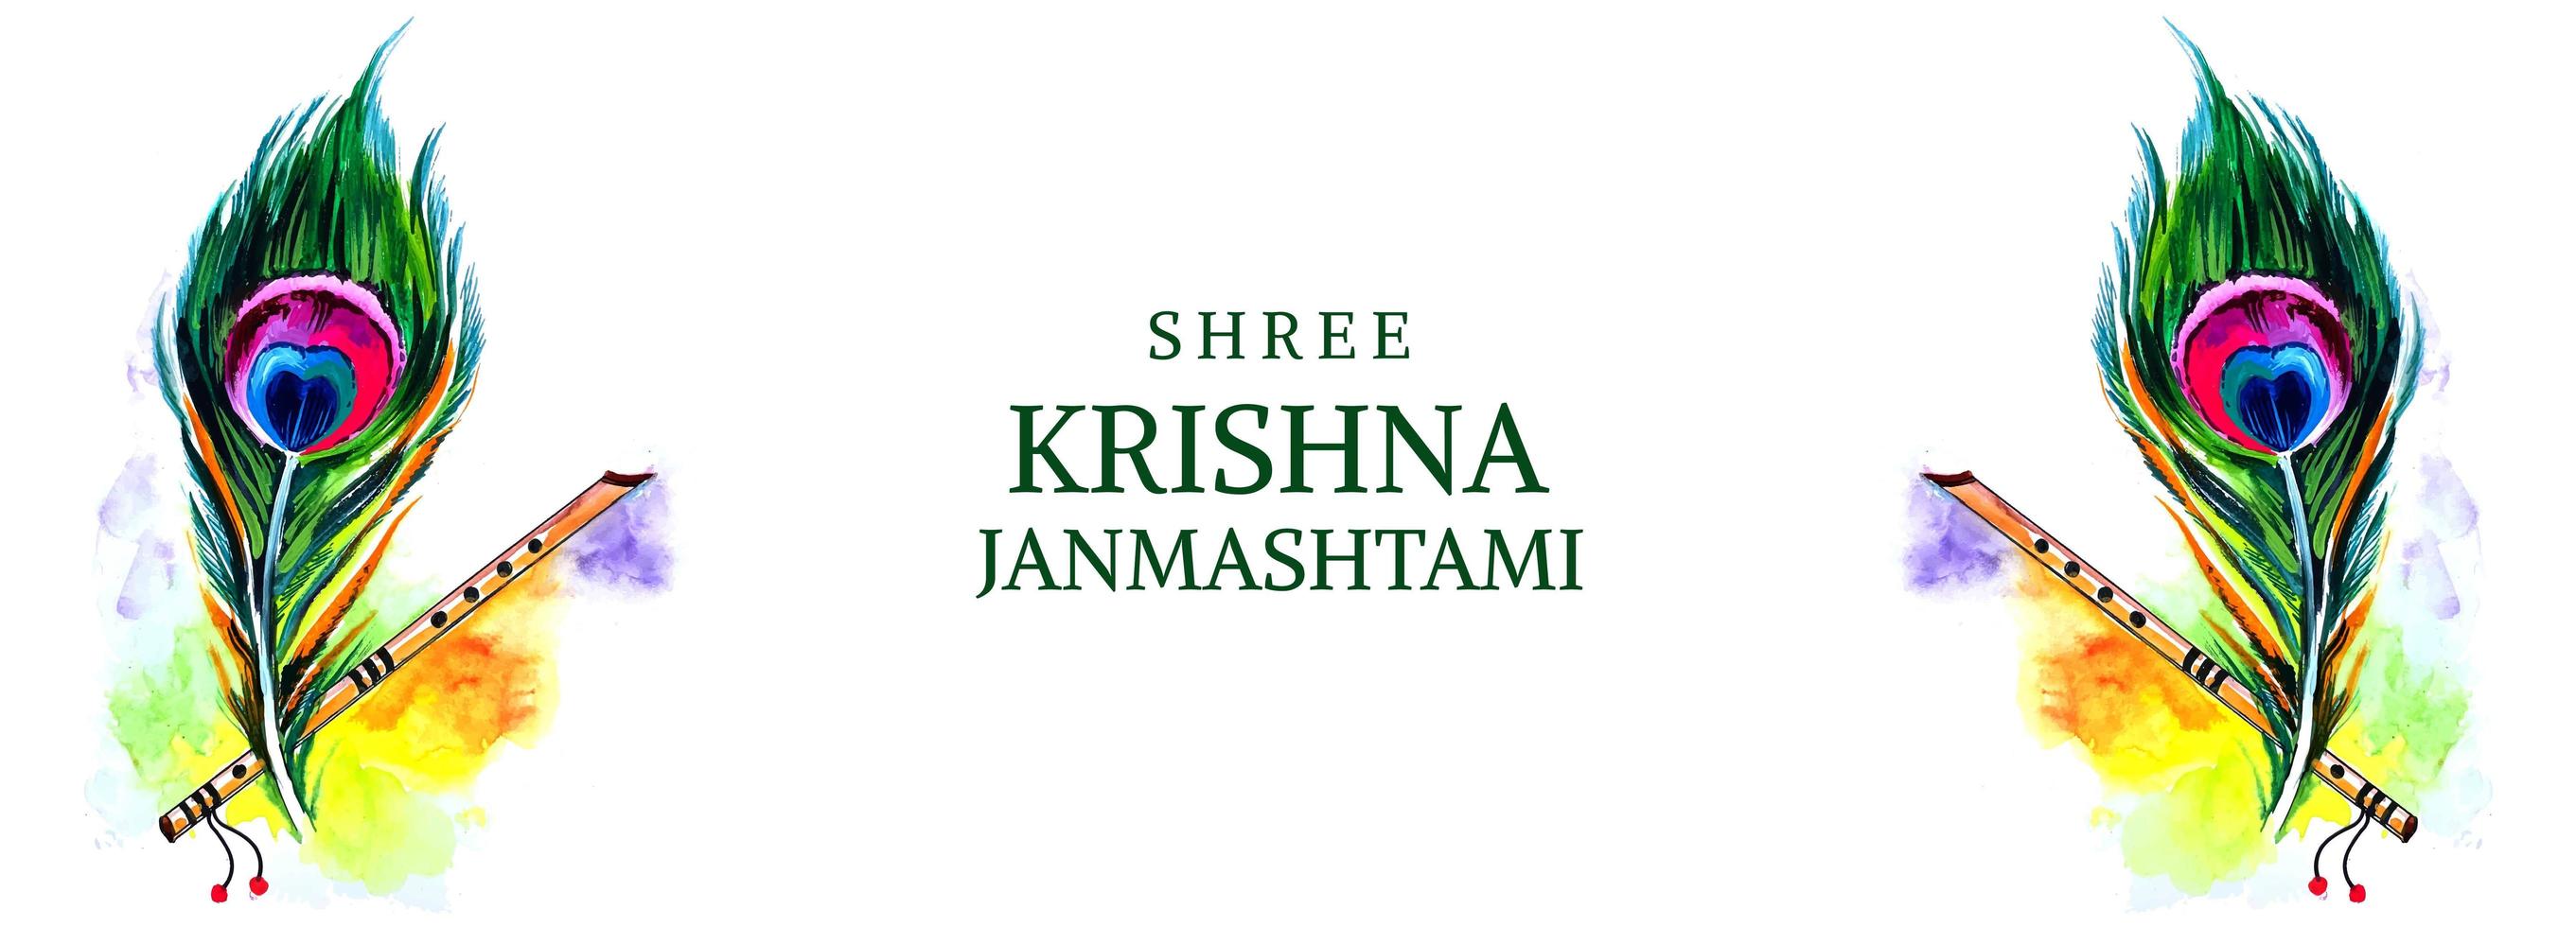 cartão de banner shree krishna janmashtami vetor